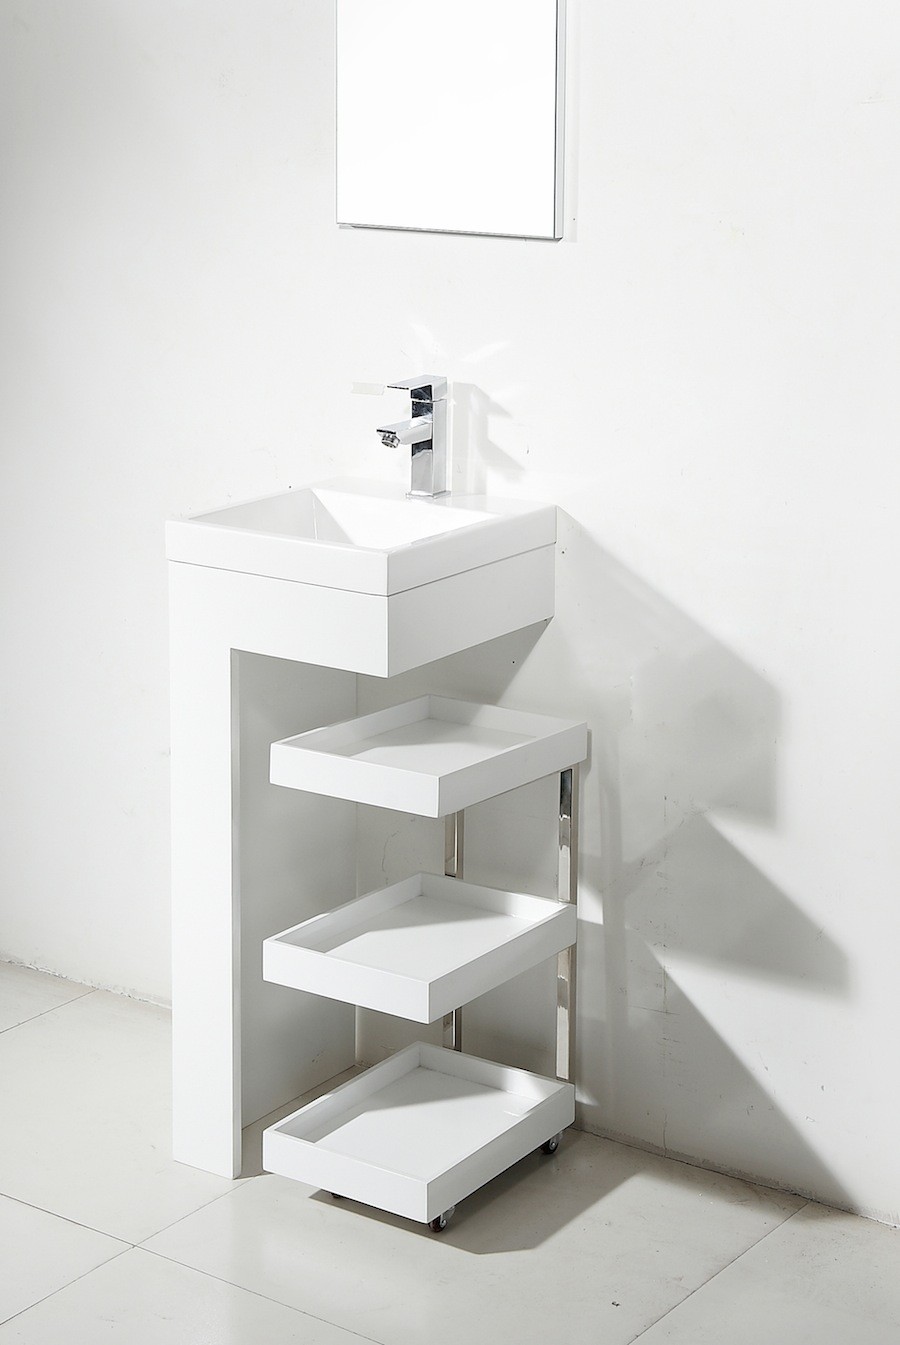 Resin Small Pedestal Sink Mobile Portable Vanity Cabinet Bathroom Shelf Linen